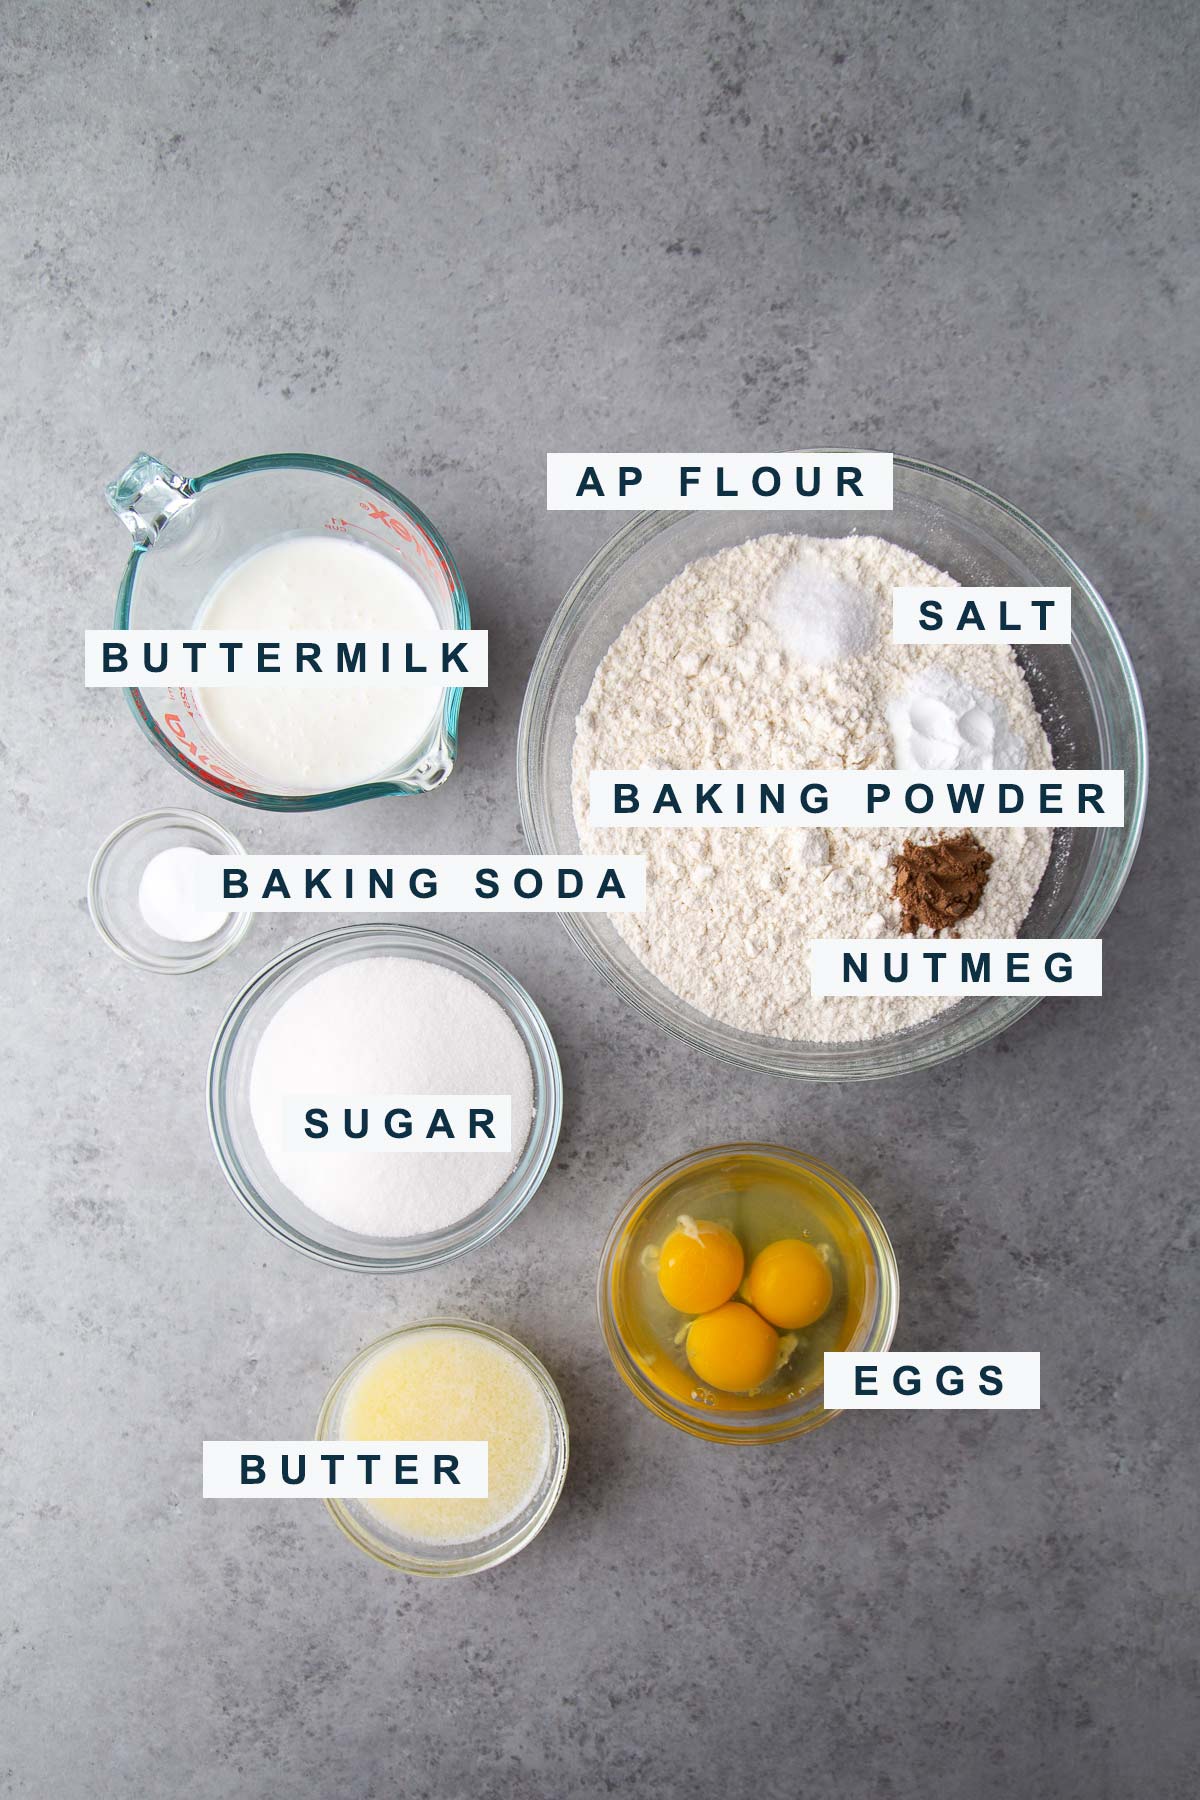 buttermilk donut ingredients include buttermilk, flour, eggs, butter, and nutmeg.